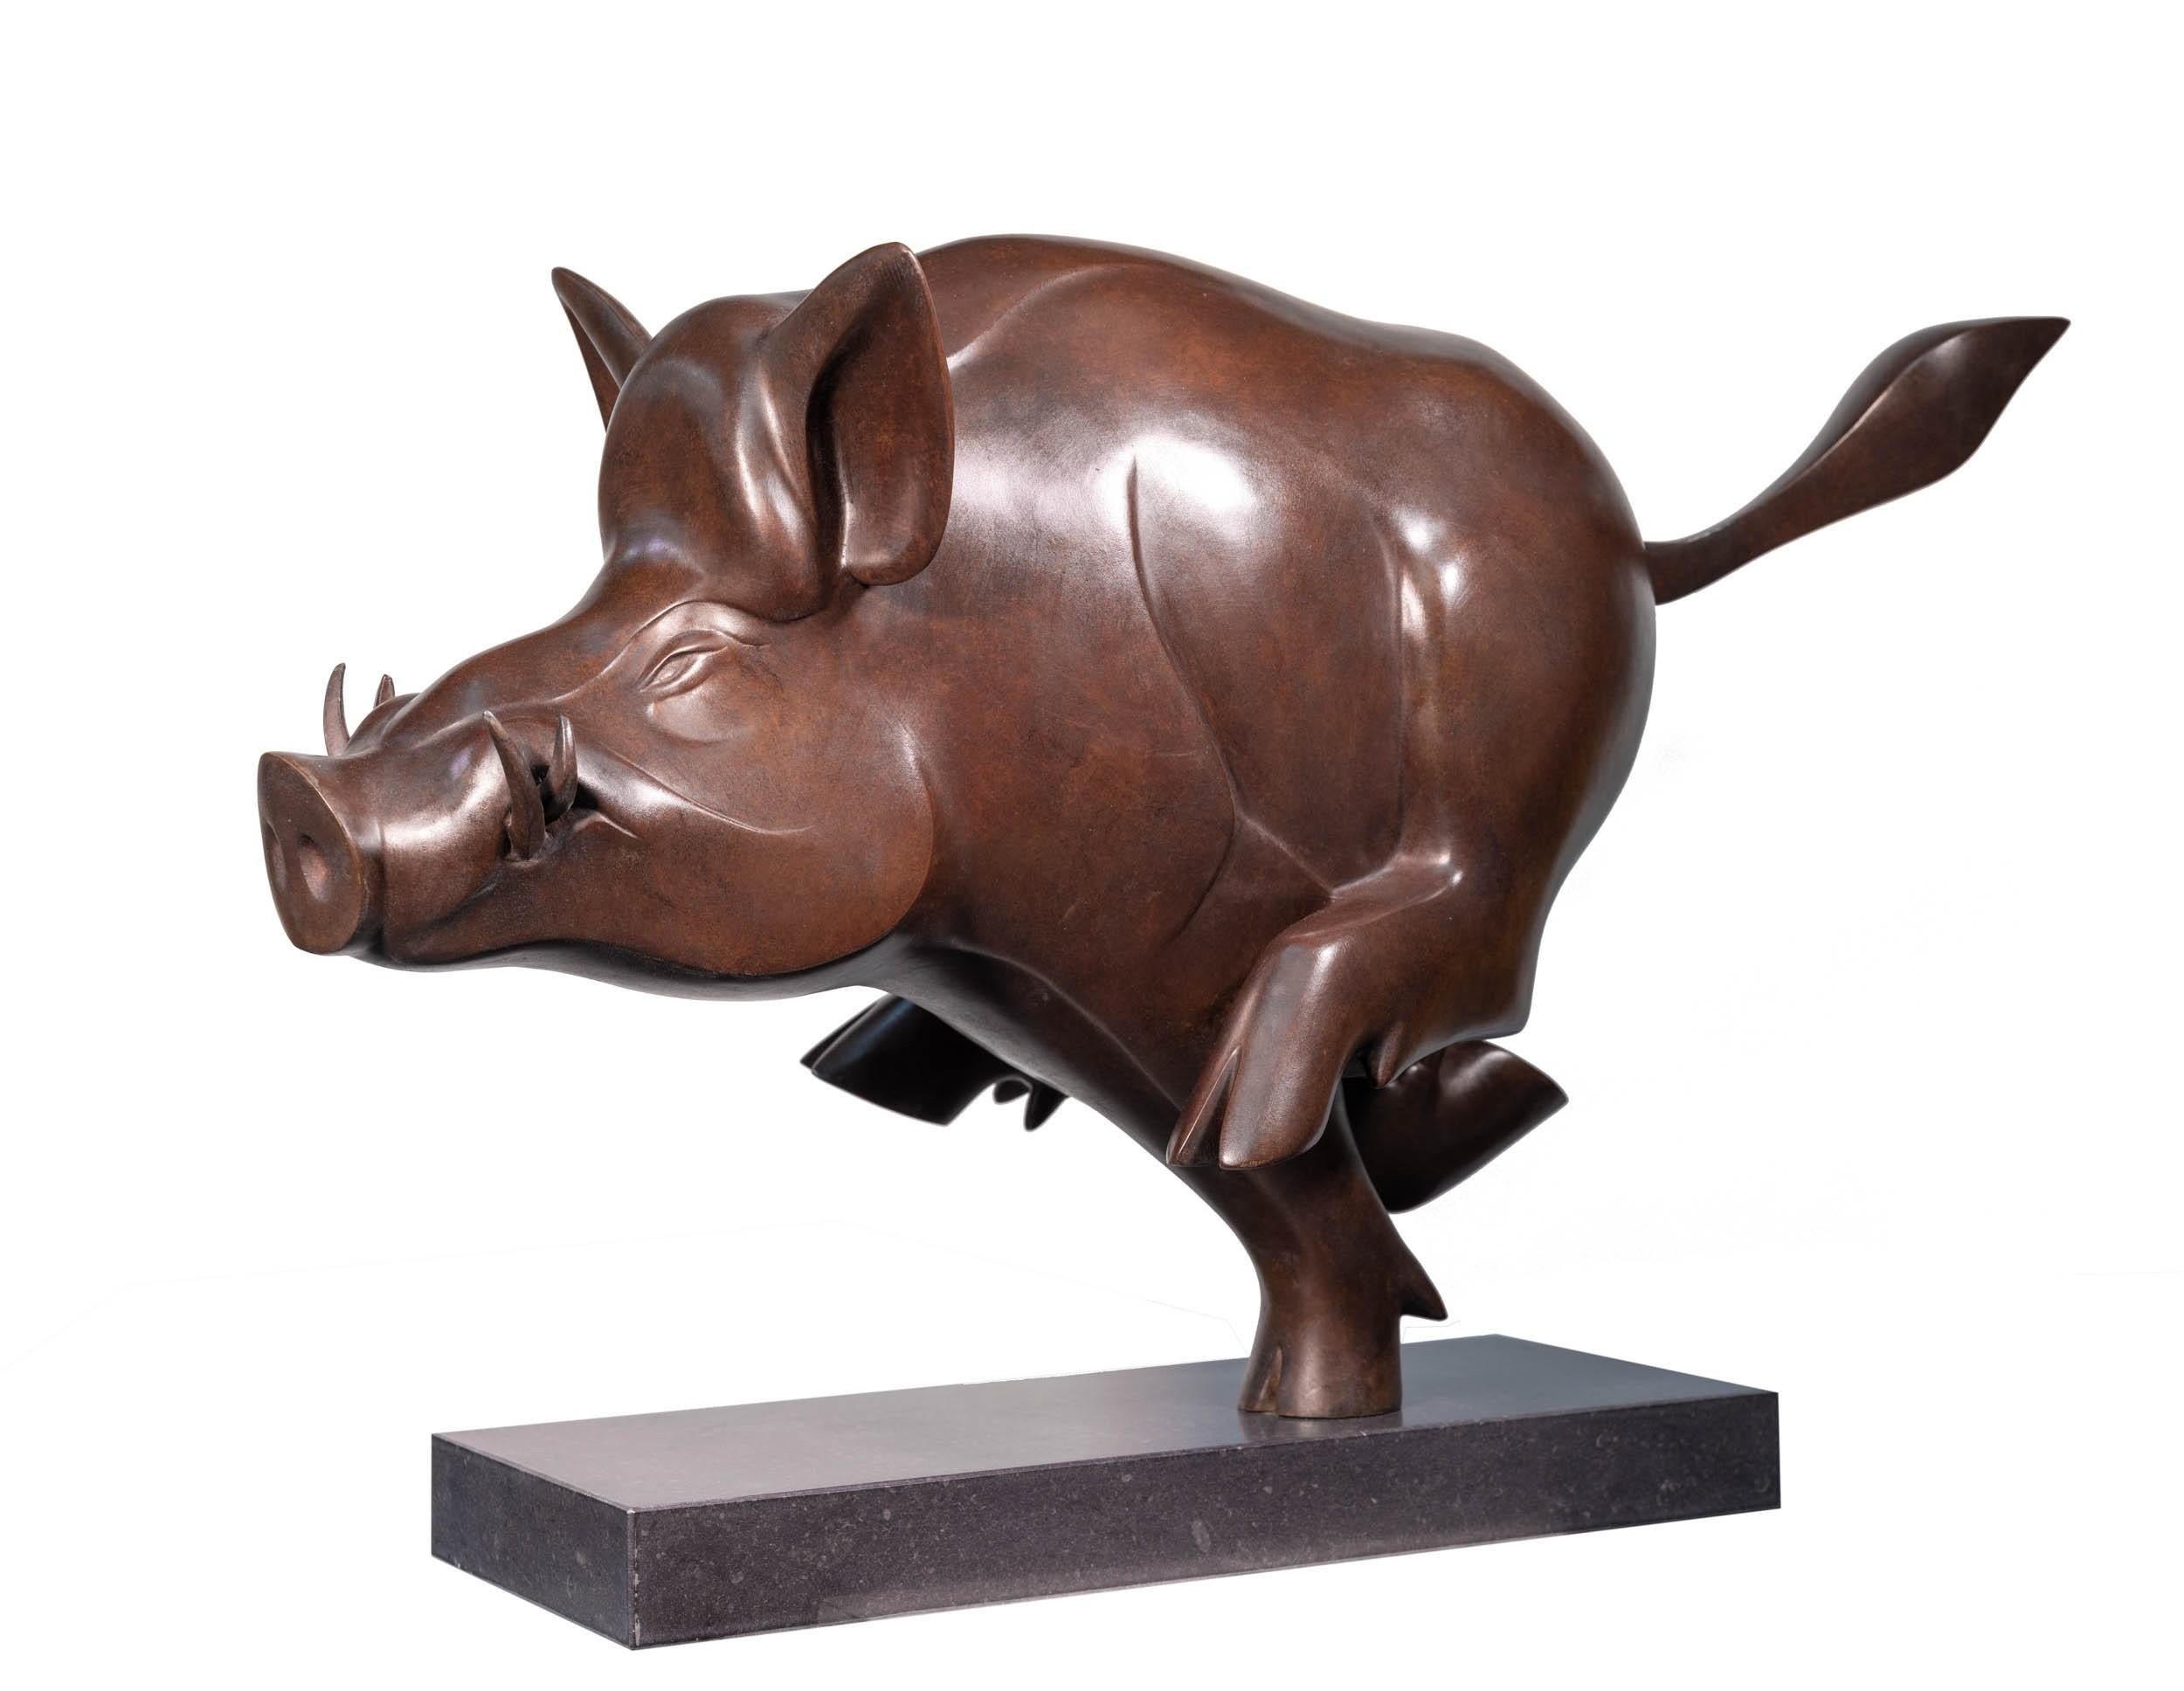 Evert den Hartog Figurative Sculpture - Everzwijn no. 2 Wild Boar Big Brown Bronze Sculpture Limited Edition